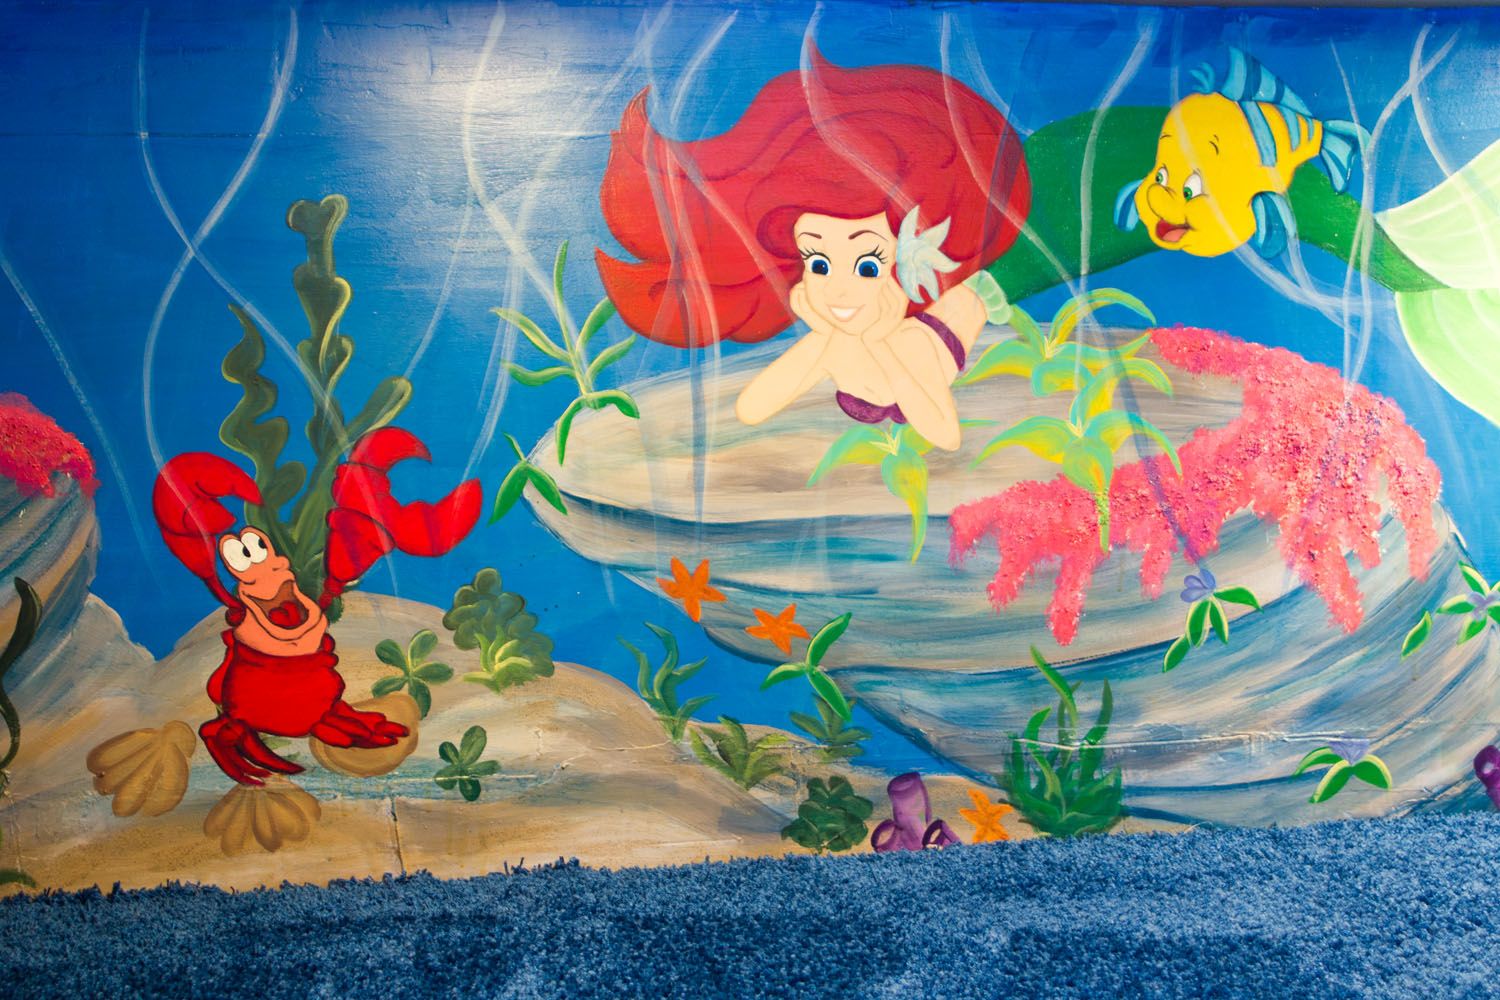 Free download Little Mermaid Wall Mural Vinyl Sticker Kids Room